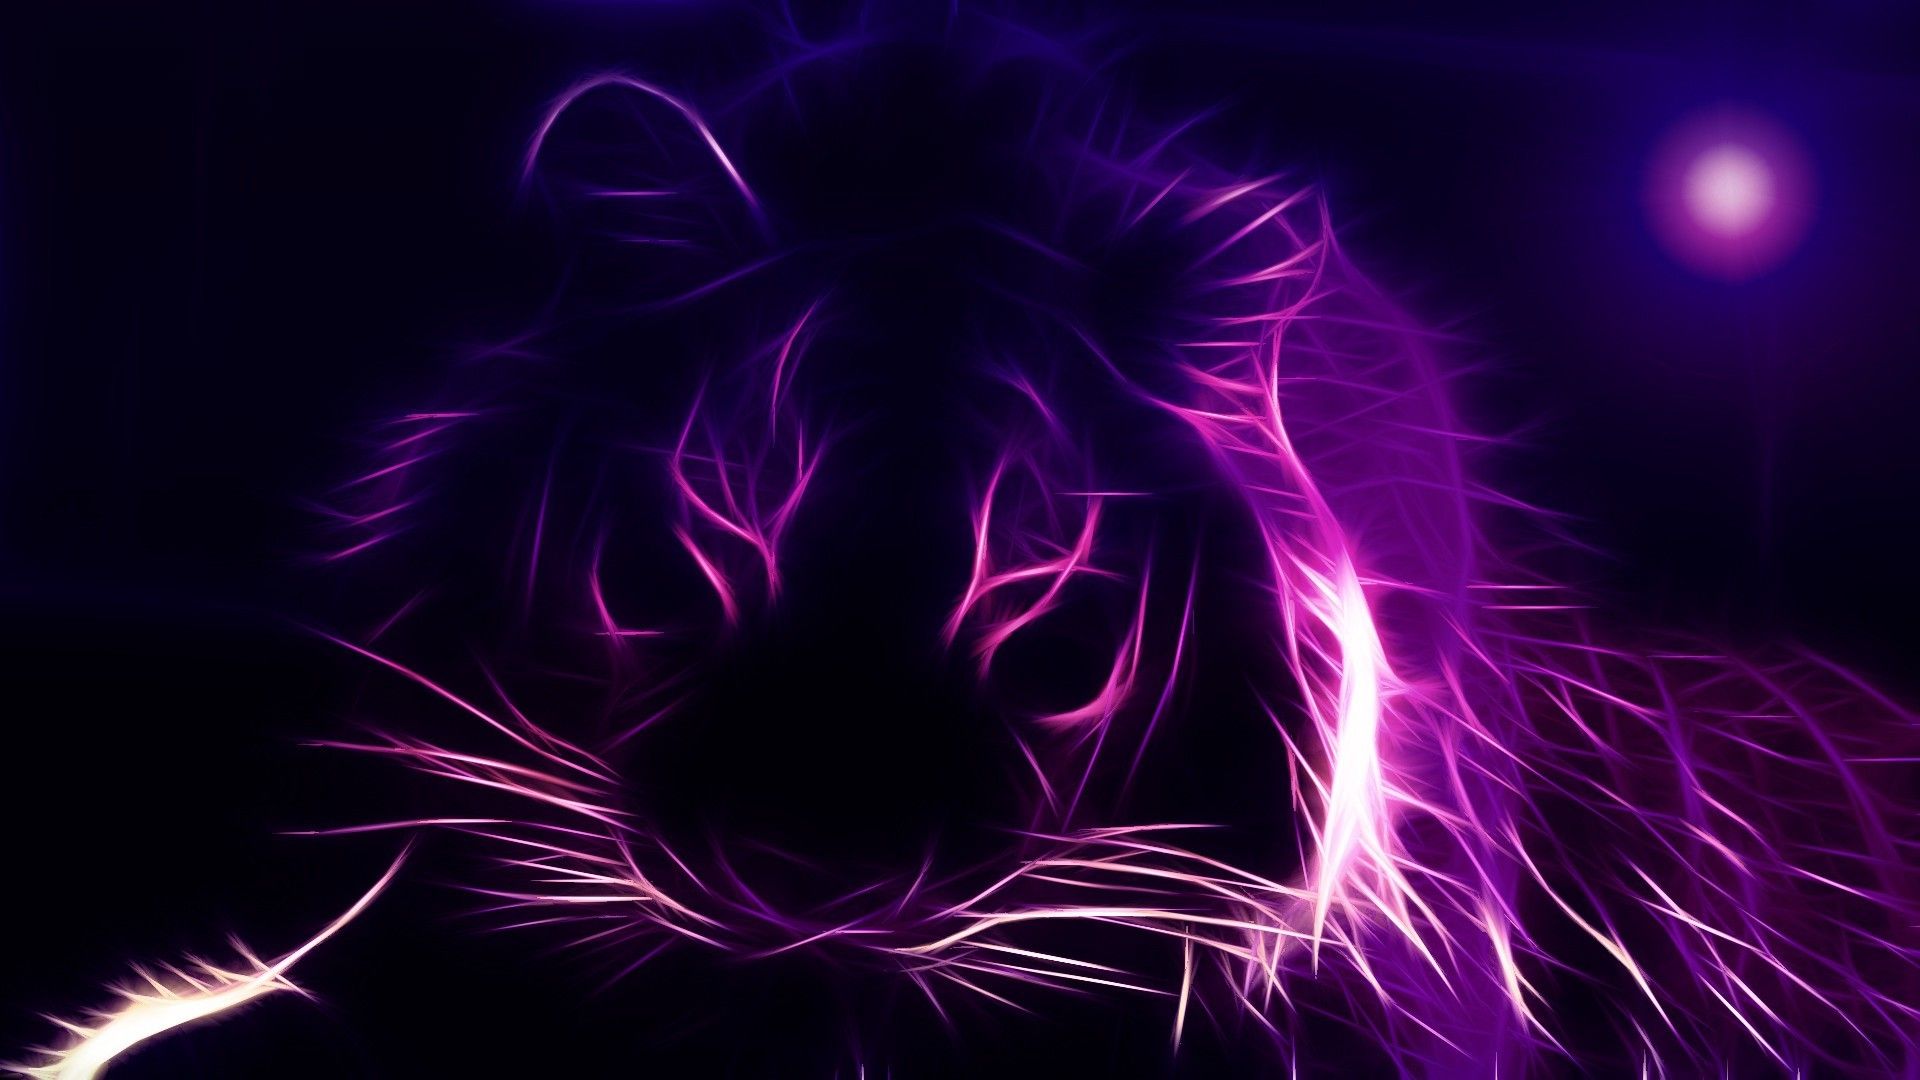 Neon tiger on a darkened background phone background image